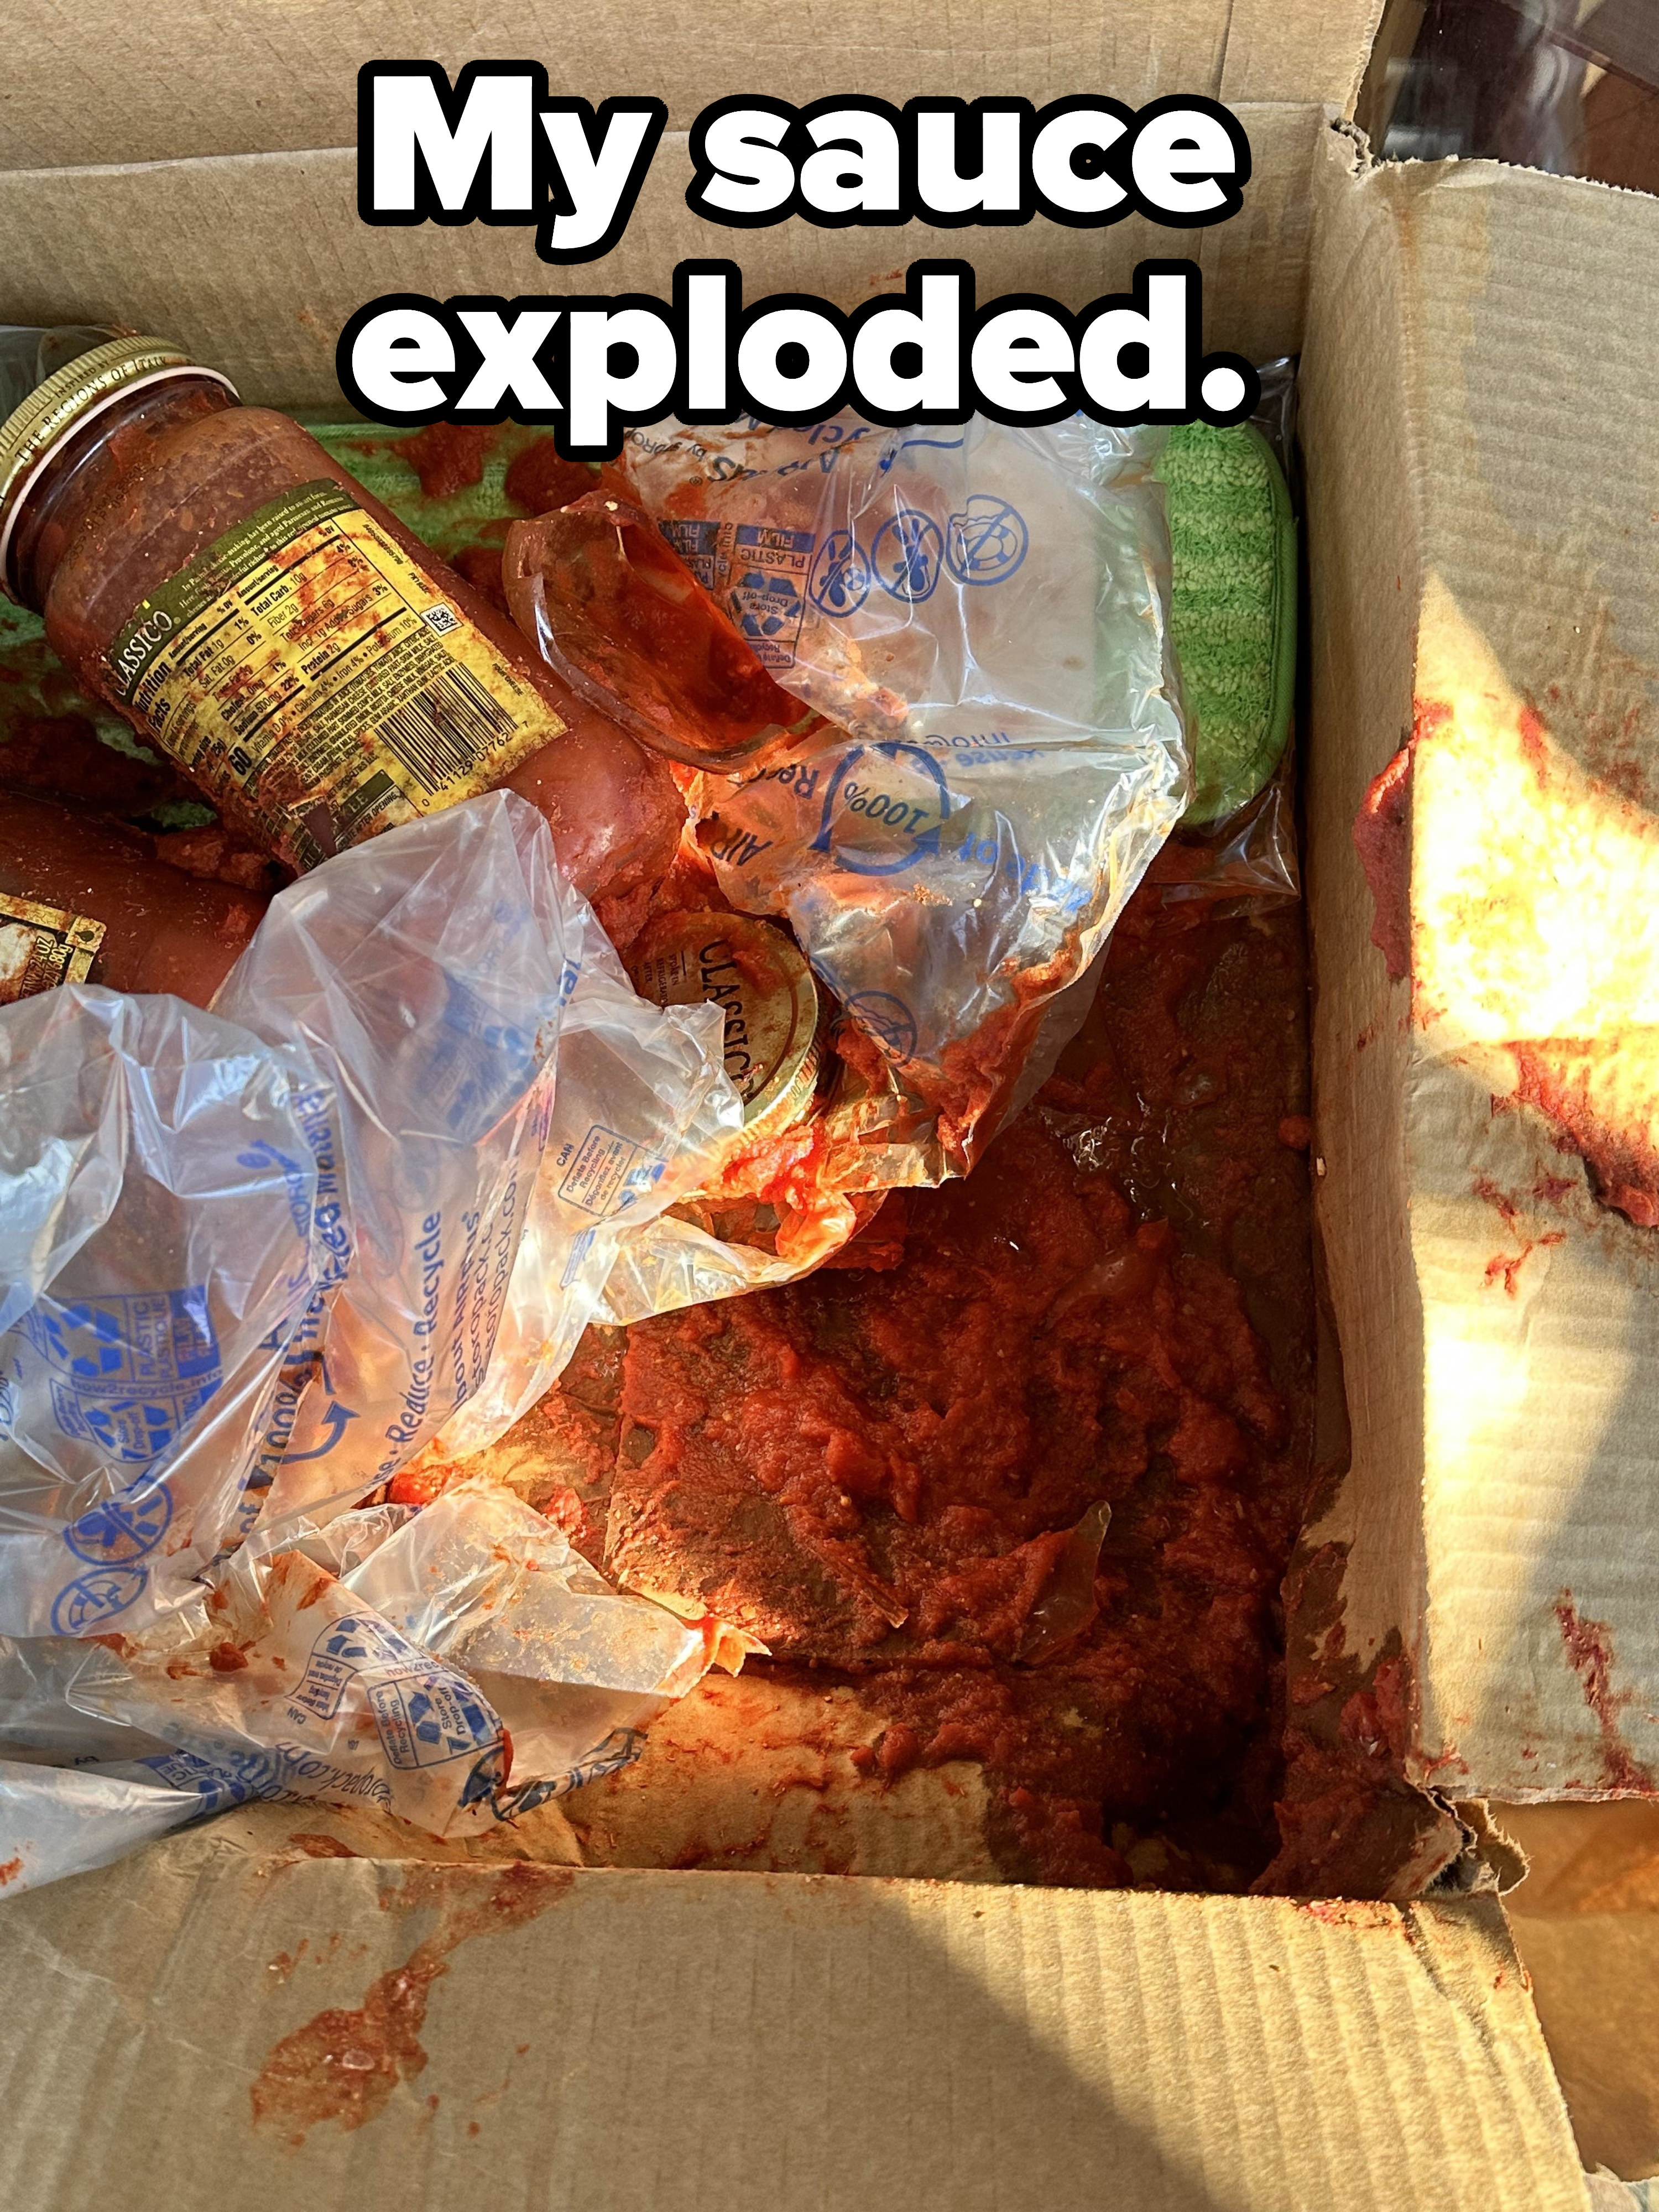 Exploded tomato sauce jar in a cardboard box